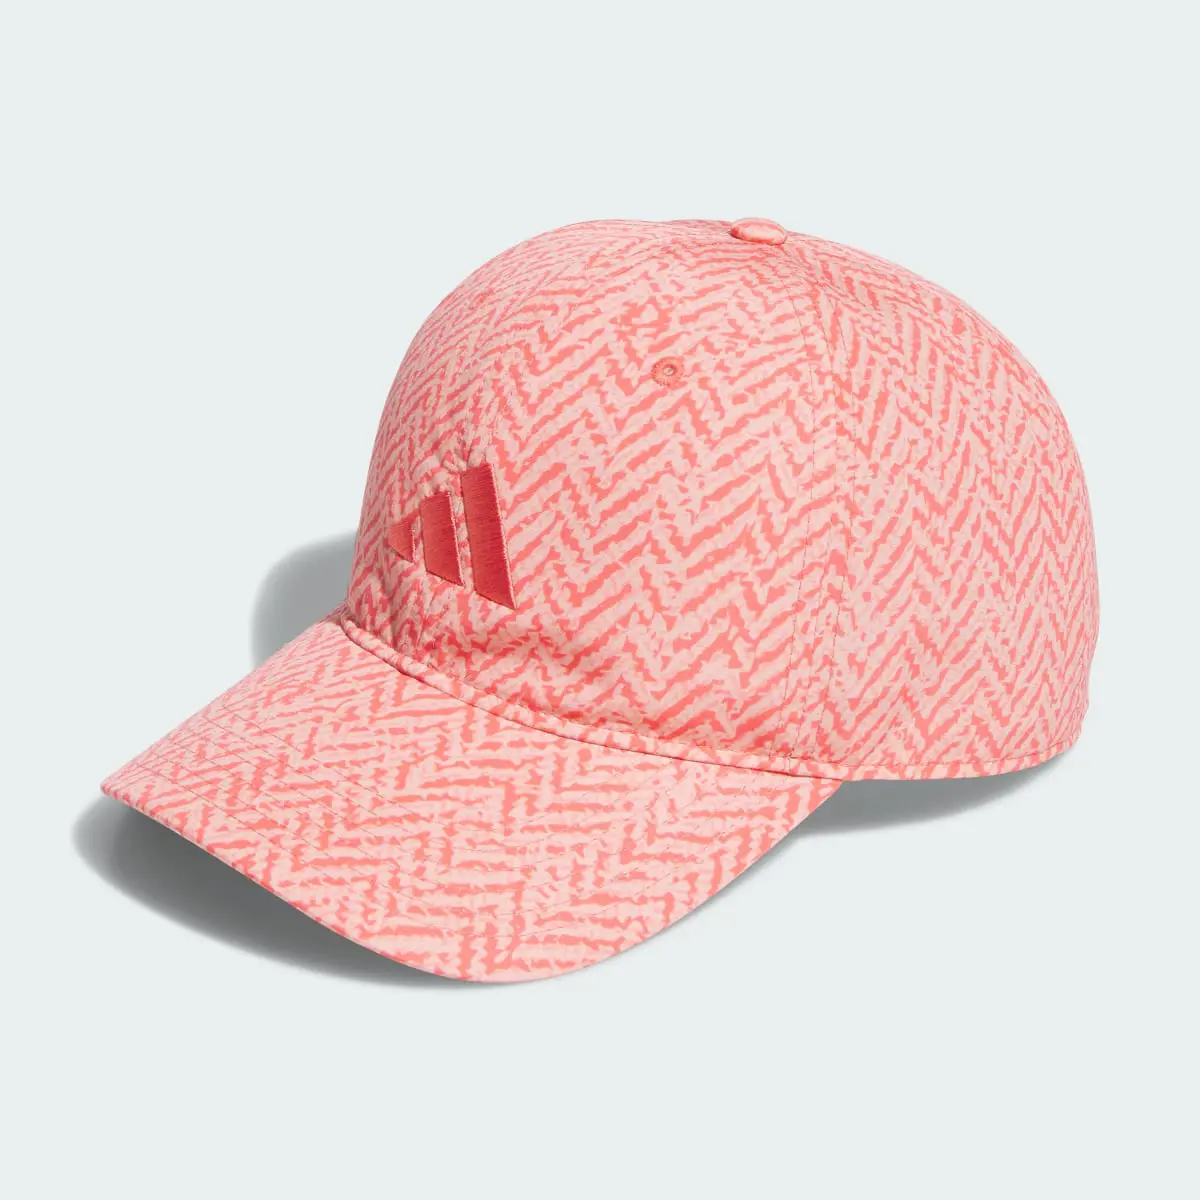 Adidas Women's Performance Printed Hat. 2